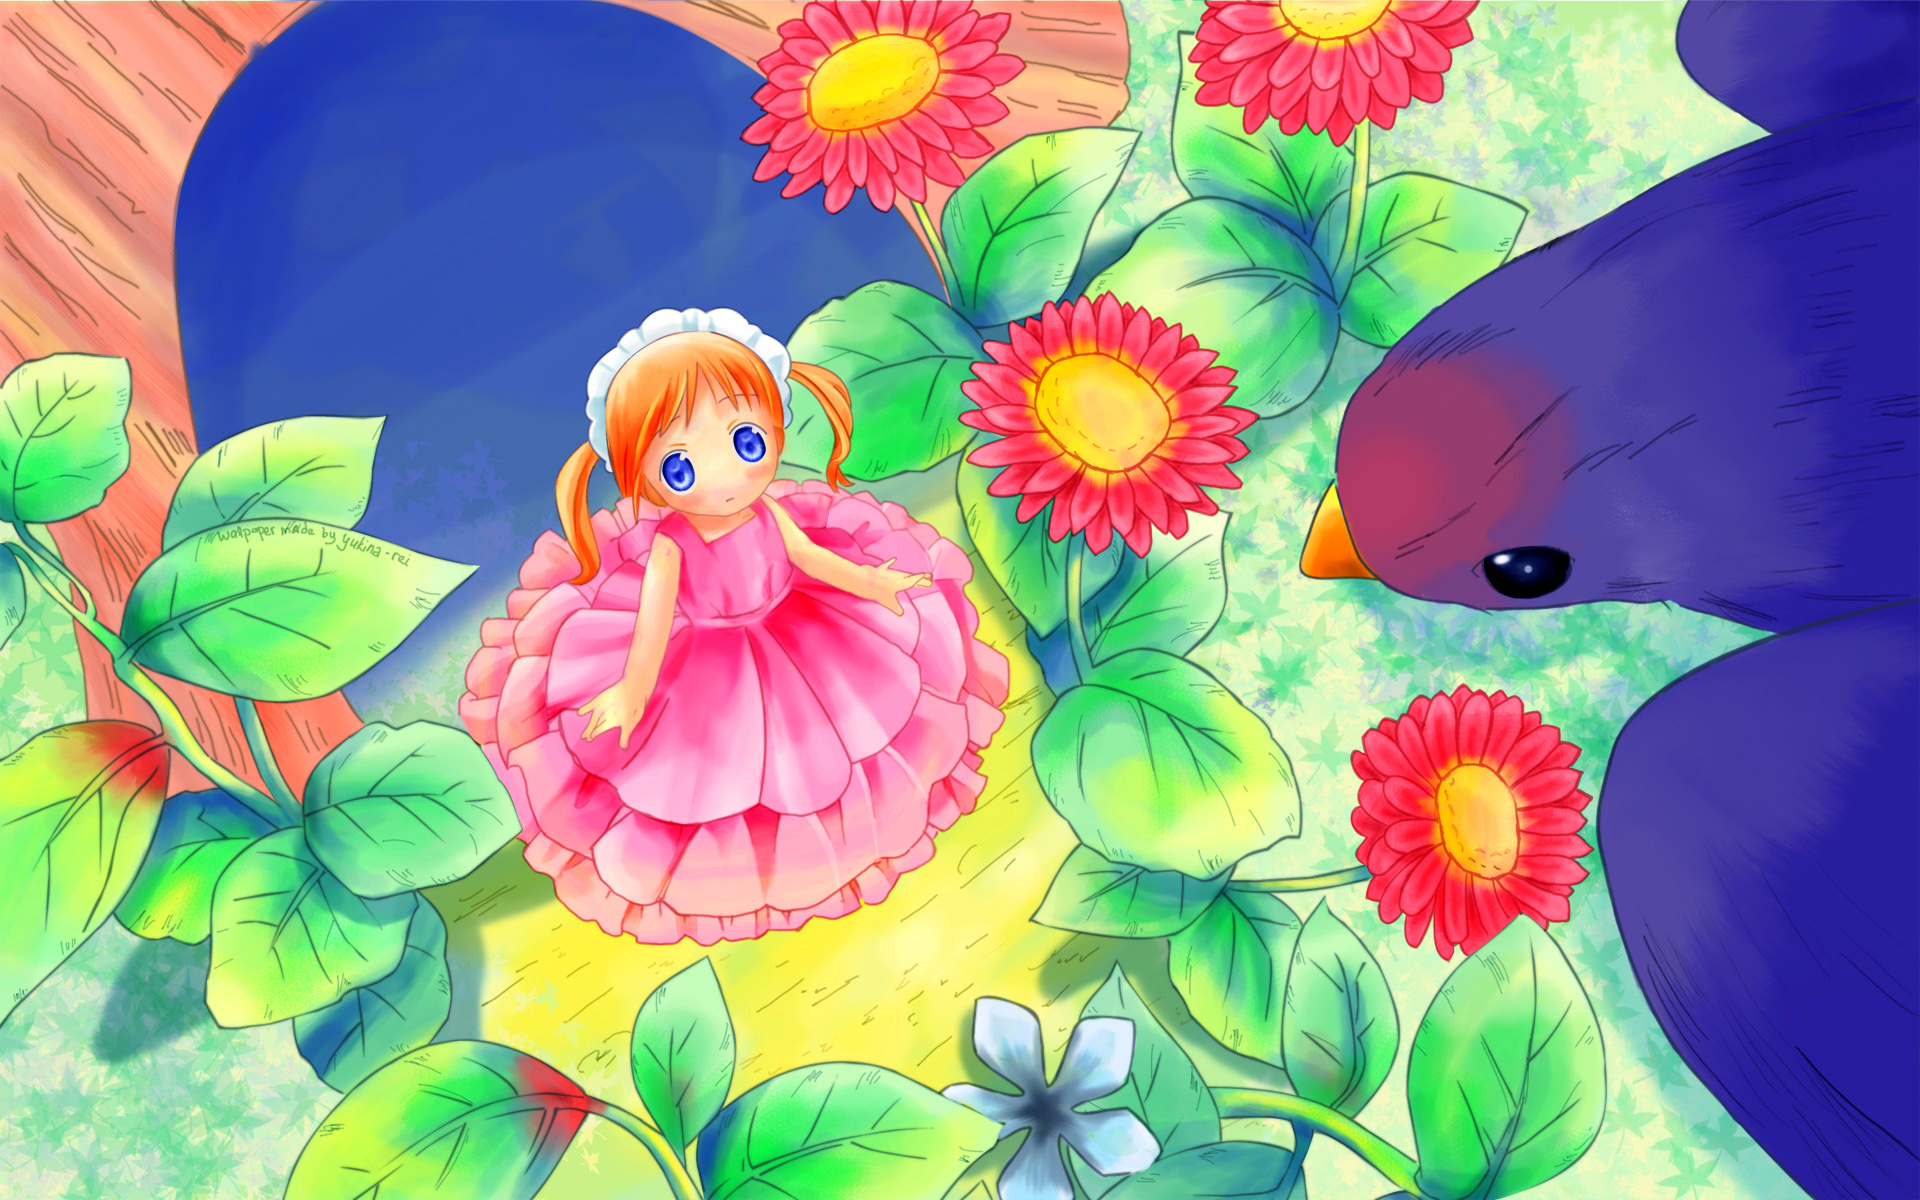 Tags Anime Thumbelina Wallpaper Pink Dress Tiny Person